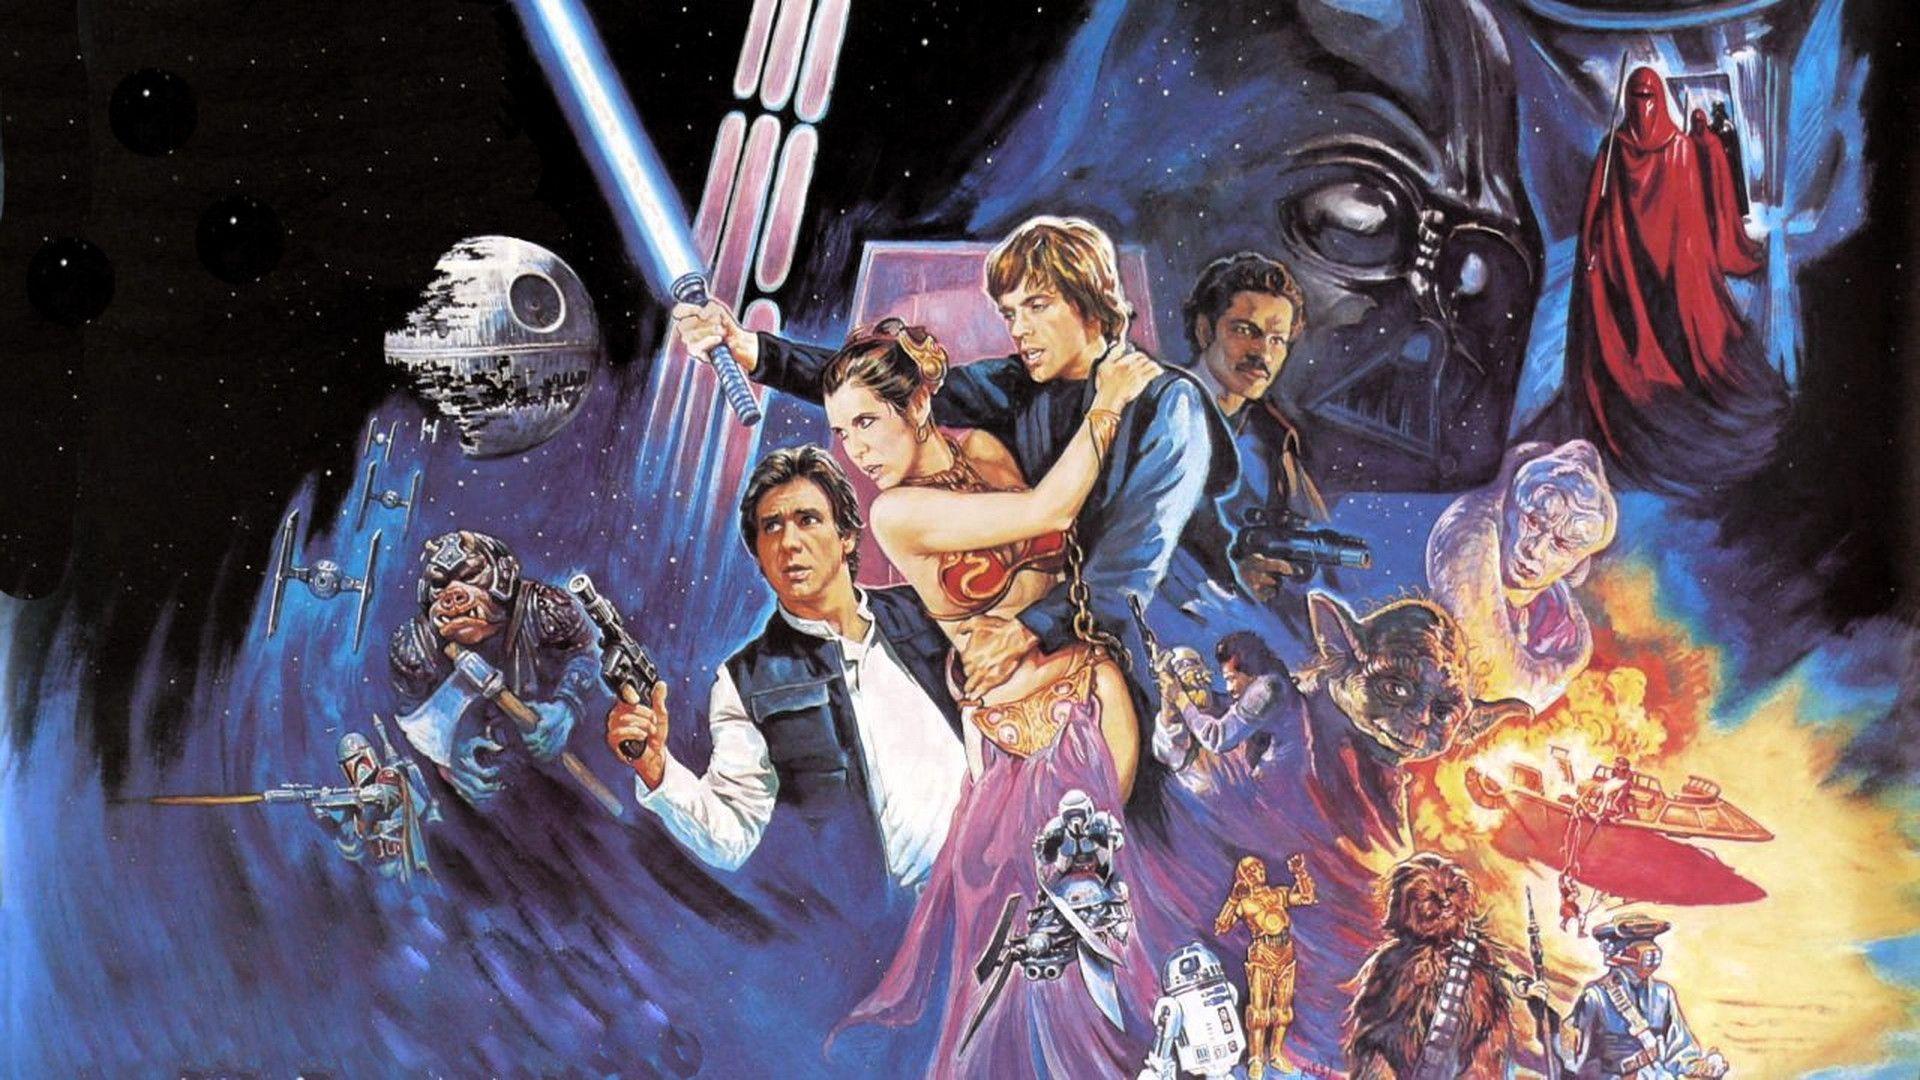 Movie Star Wars Episode VI: Return Of The Jedi Wallpaper 1920x1080